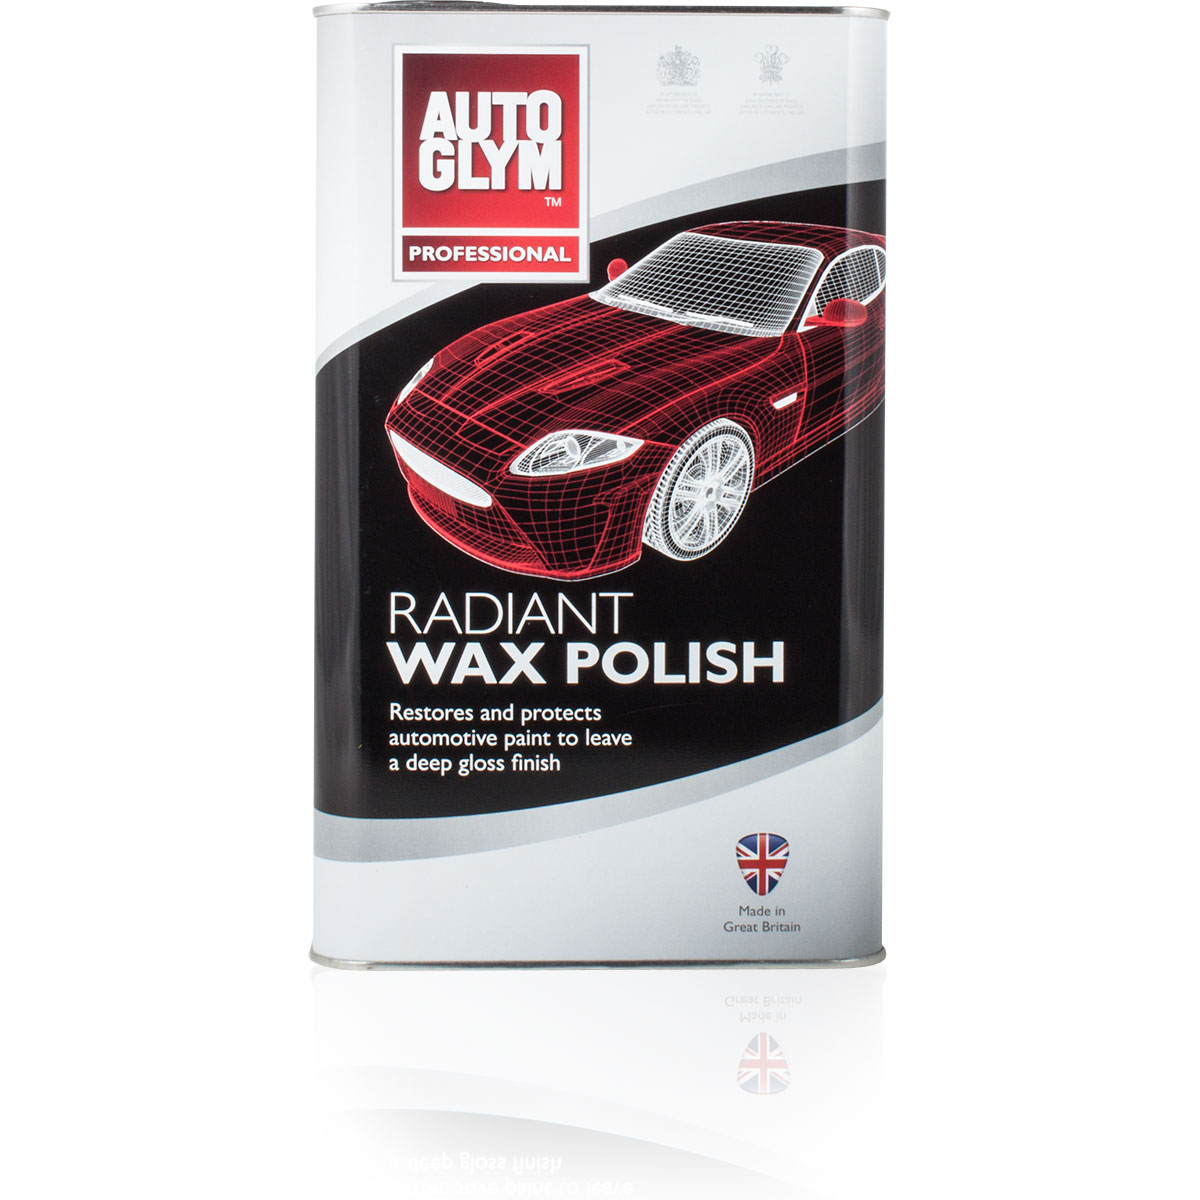 SIAMPOOLSUP • Wax One Black Car Wash and Wax 650 ml.